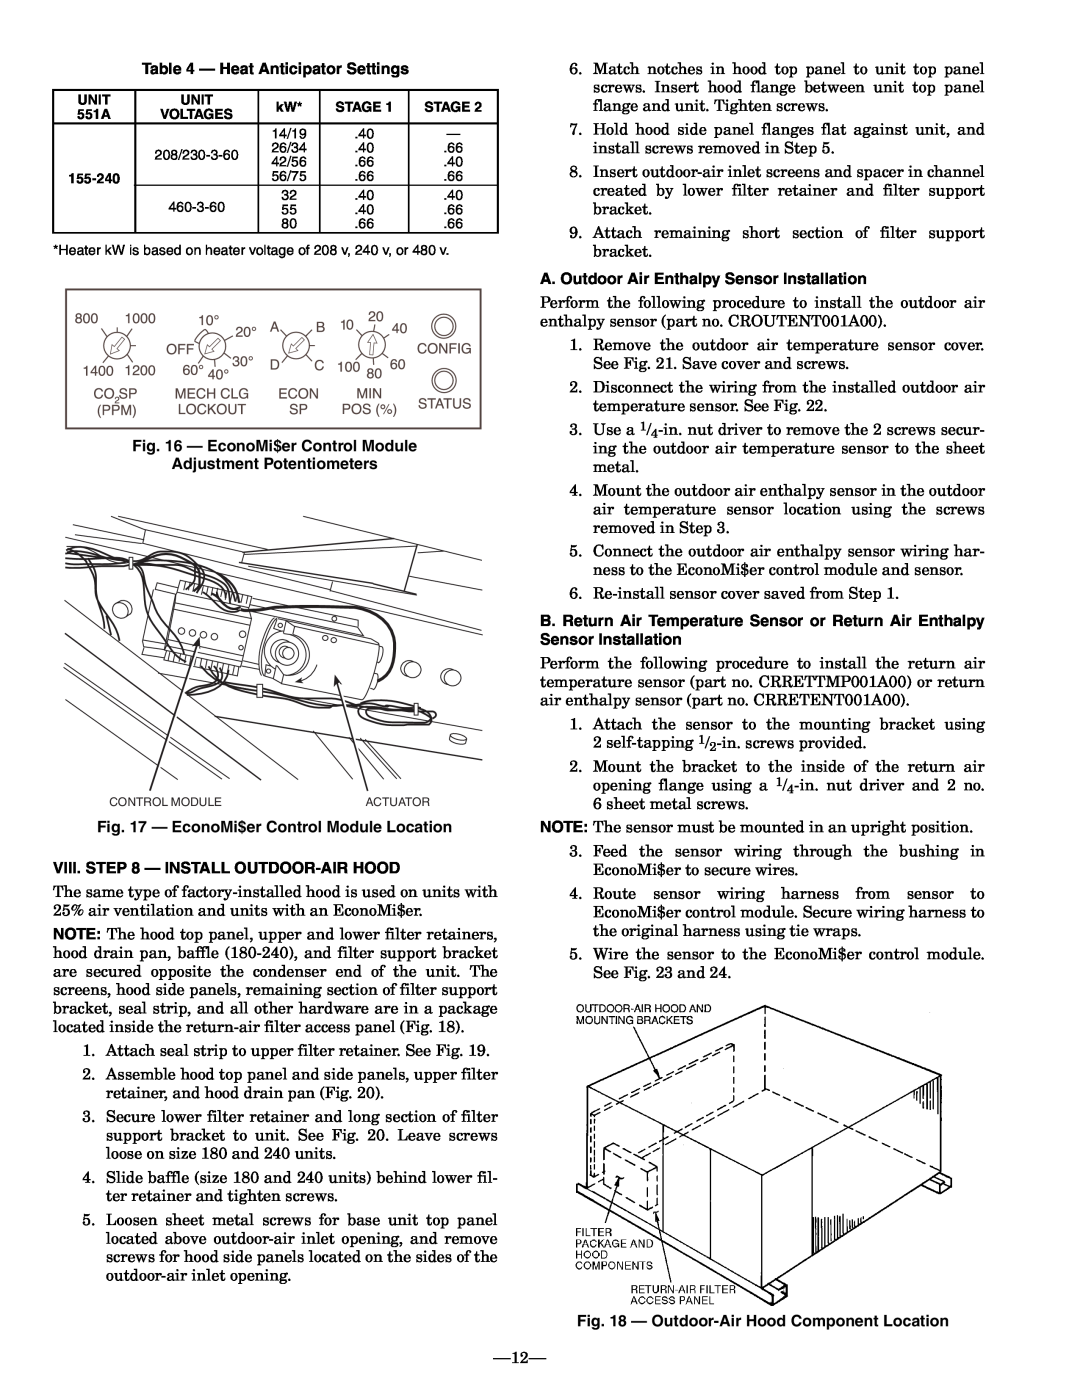 Bryant 551A operation manual Heat Anticipator Settings, EconoMi$er Control Module, Adjustment Potentiometers 